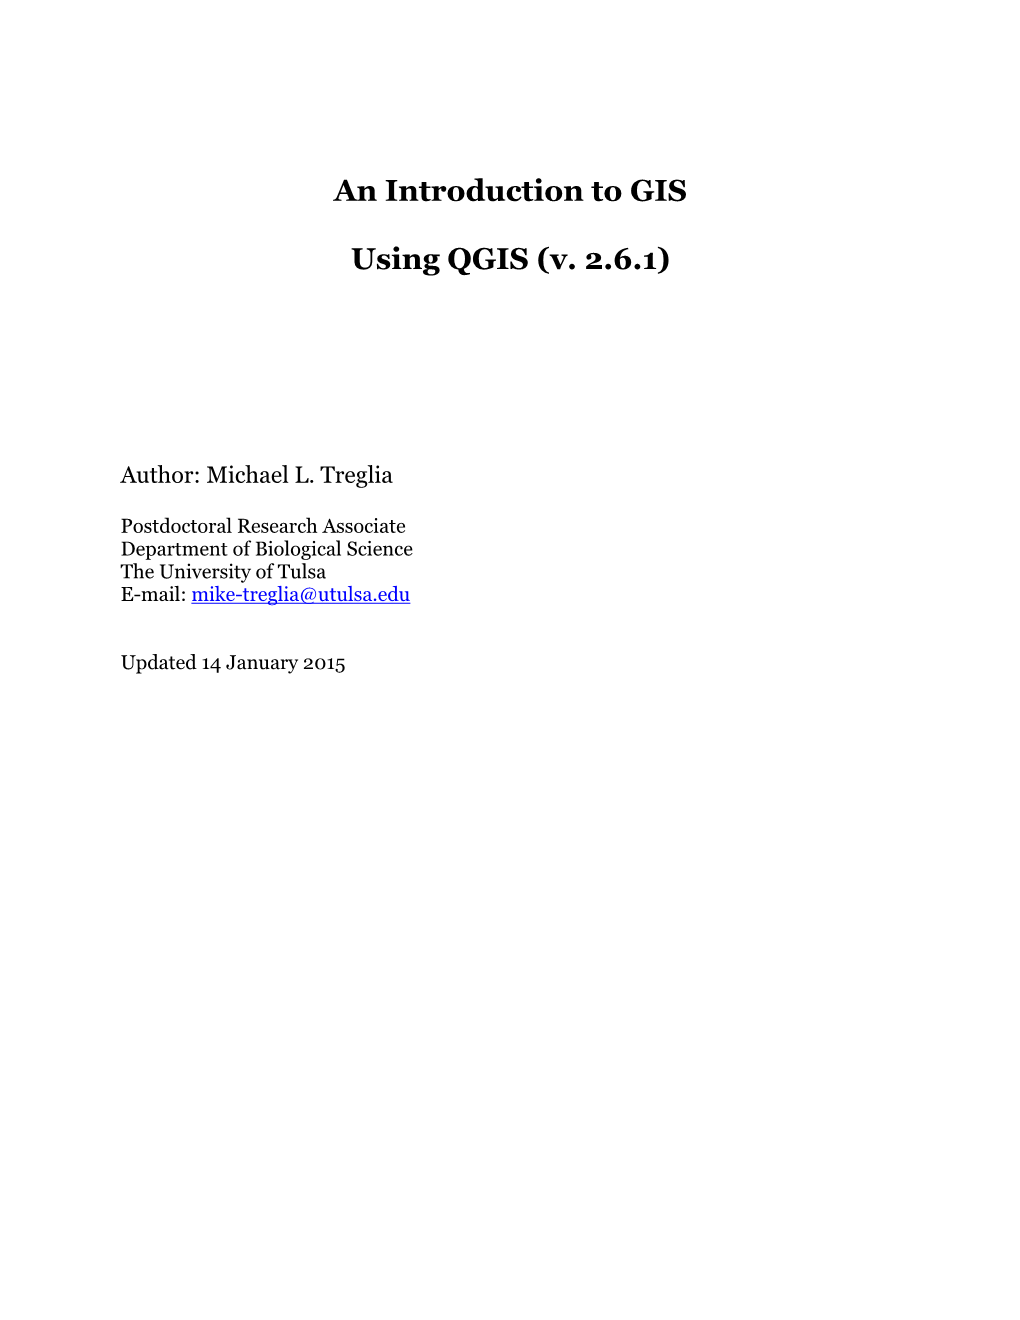 An Introduction to GIS Using QGIS (V. 2.6.1)